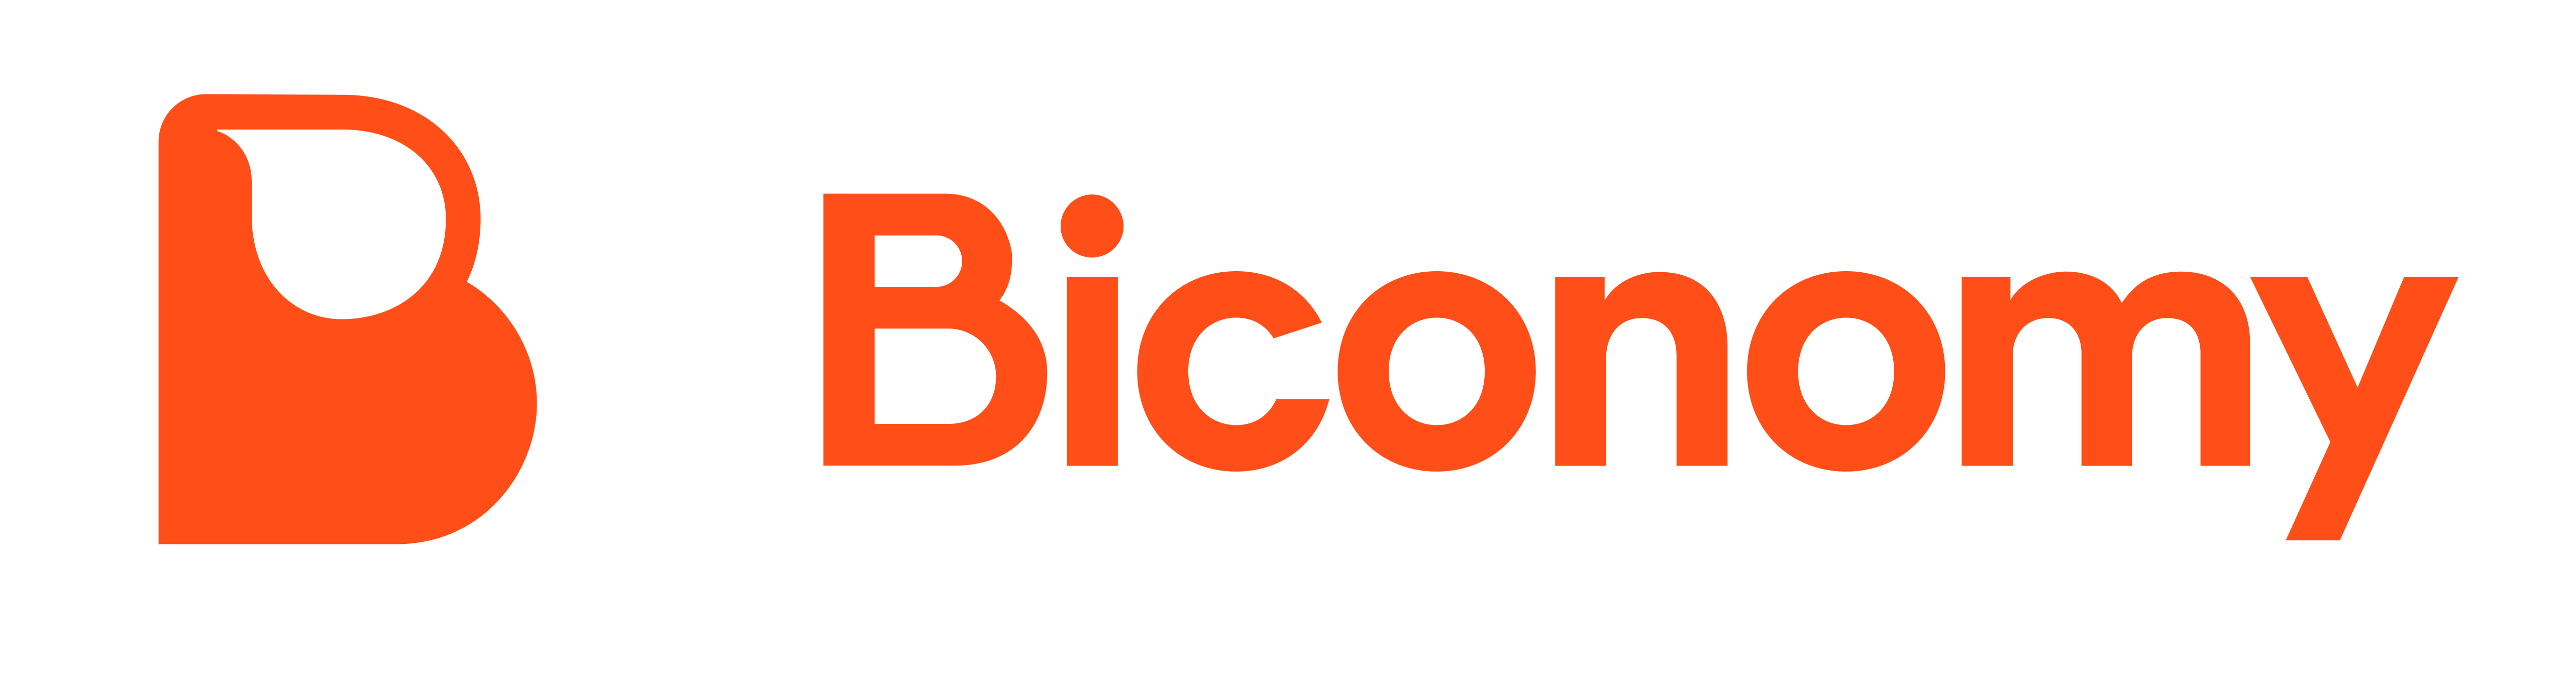 logo-biconomy.png